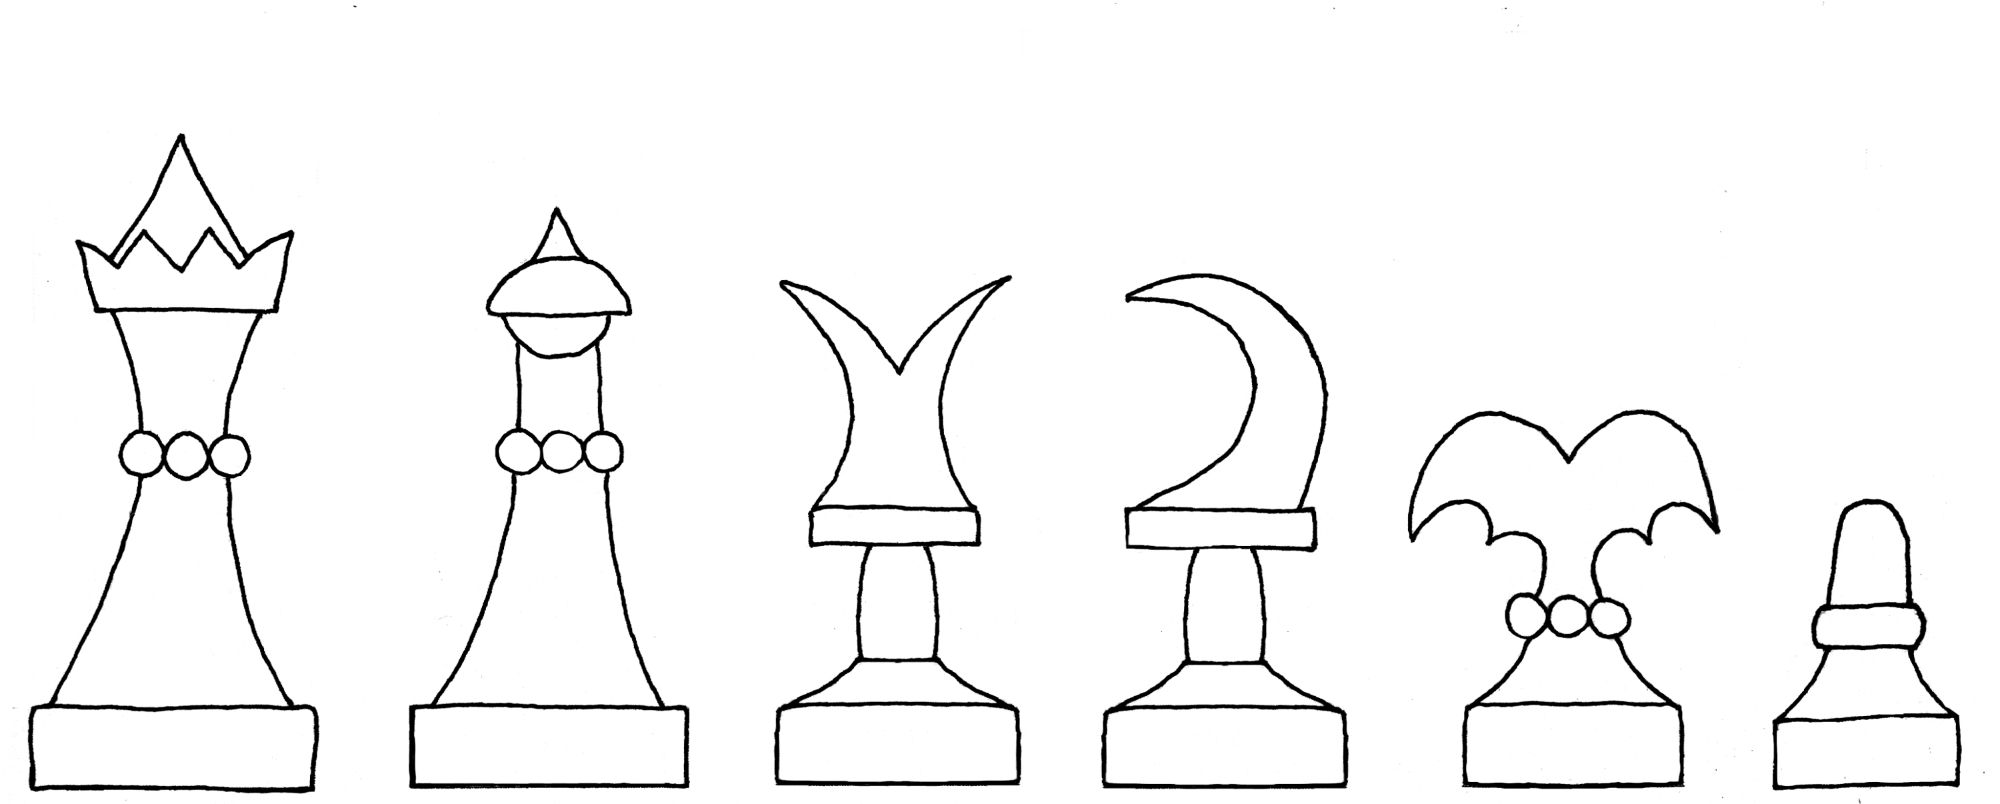 Ammenhausen's Schachzabelbuch chess set  interpretive diagram